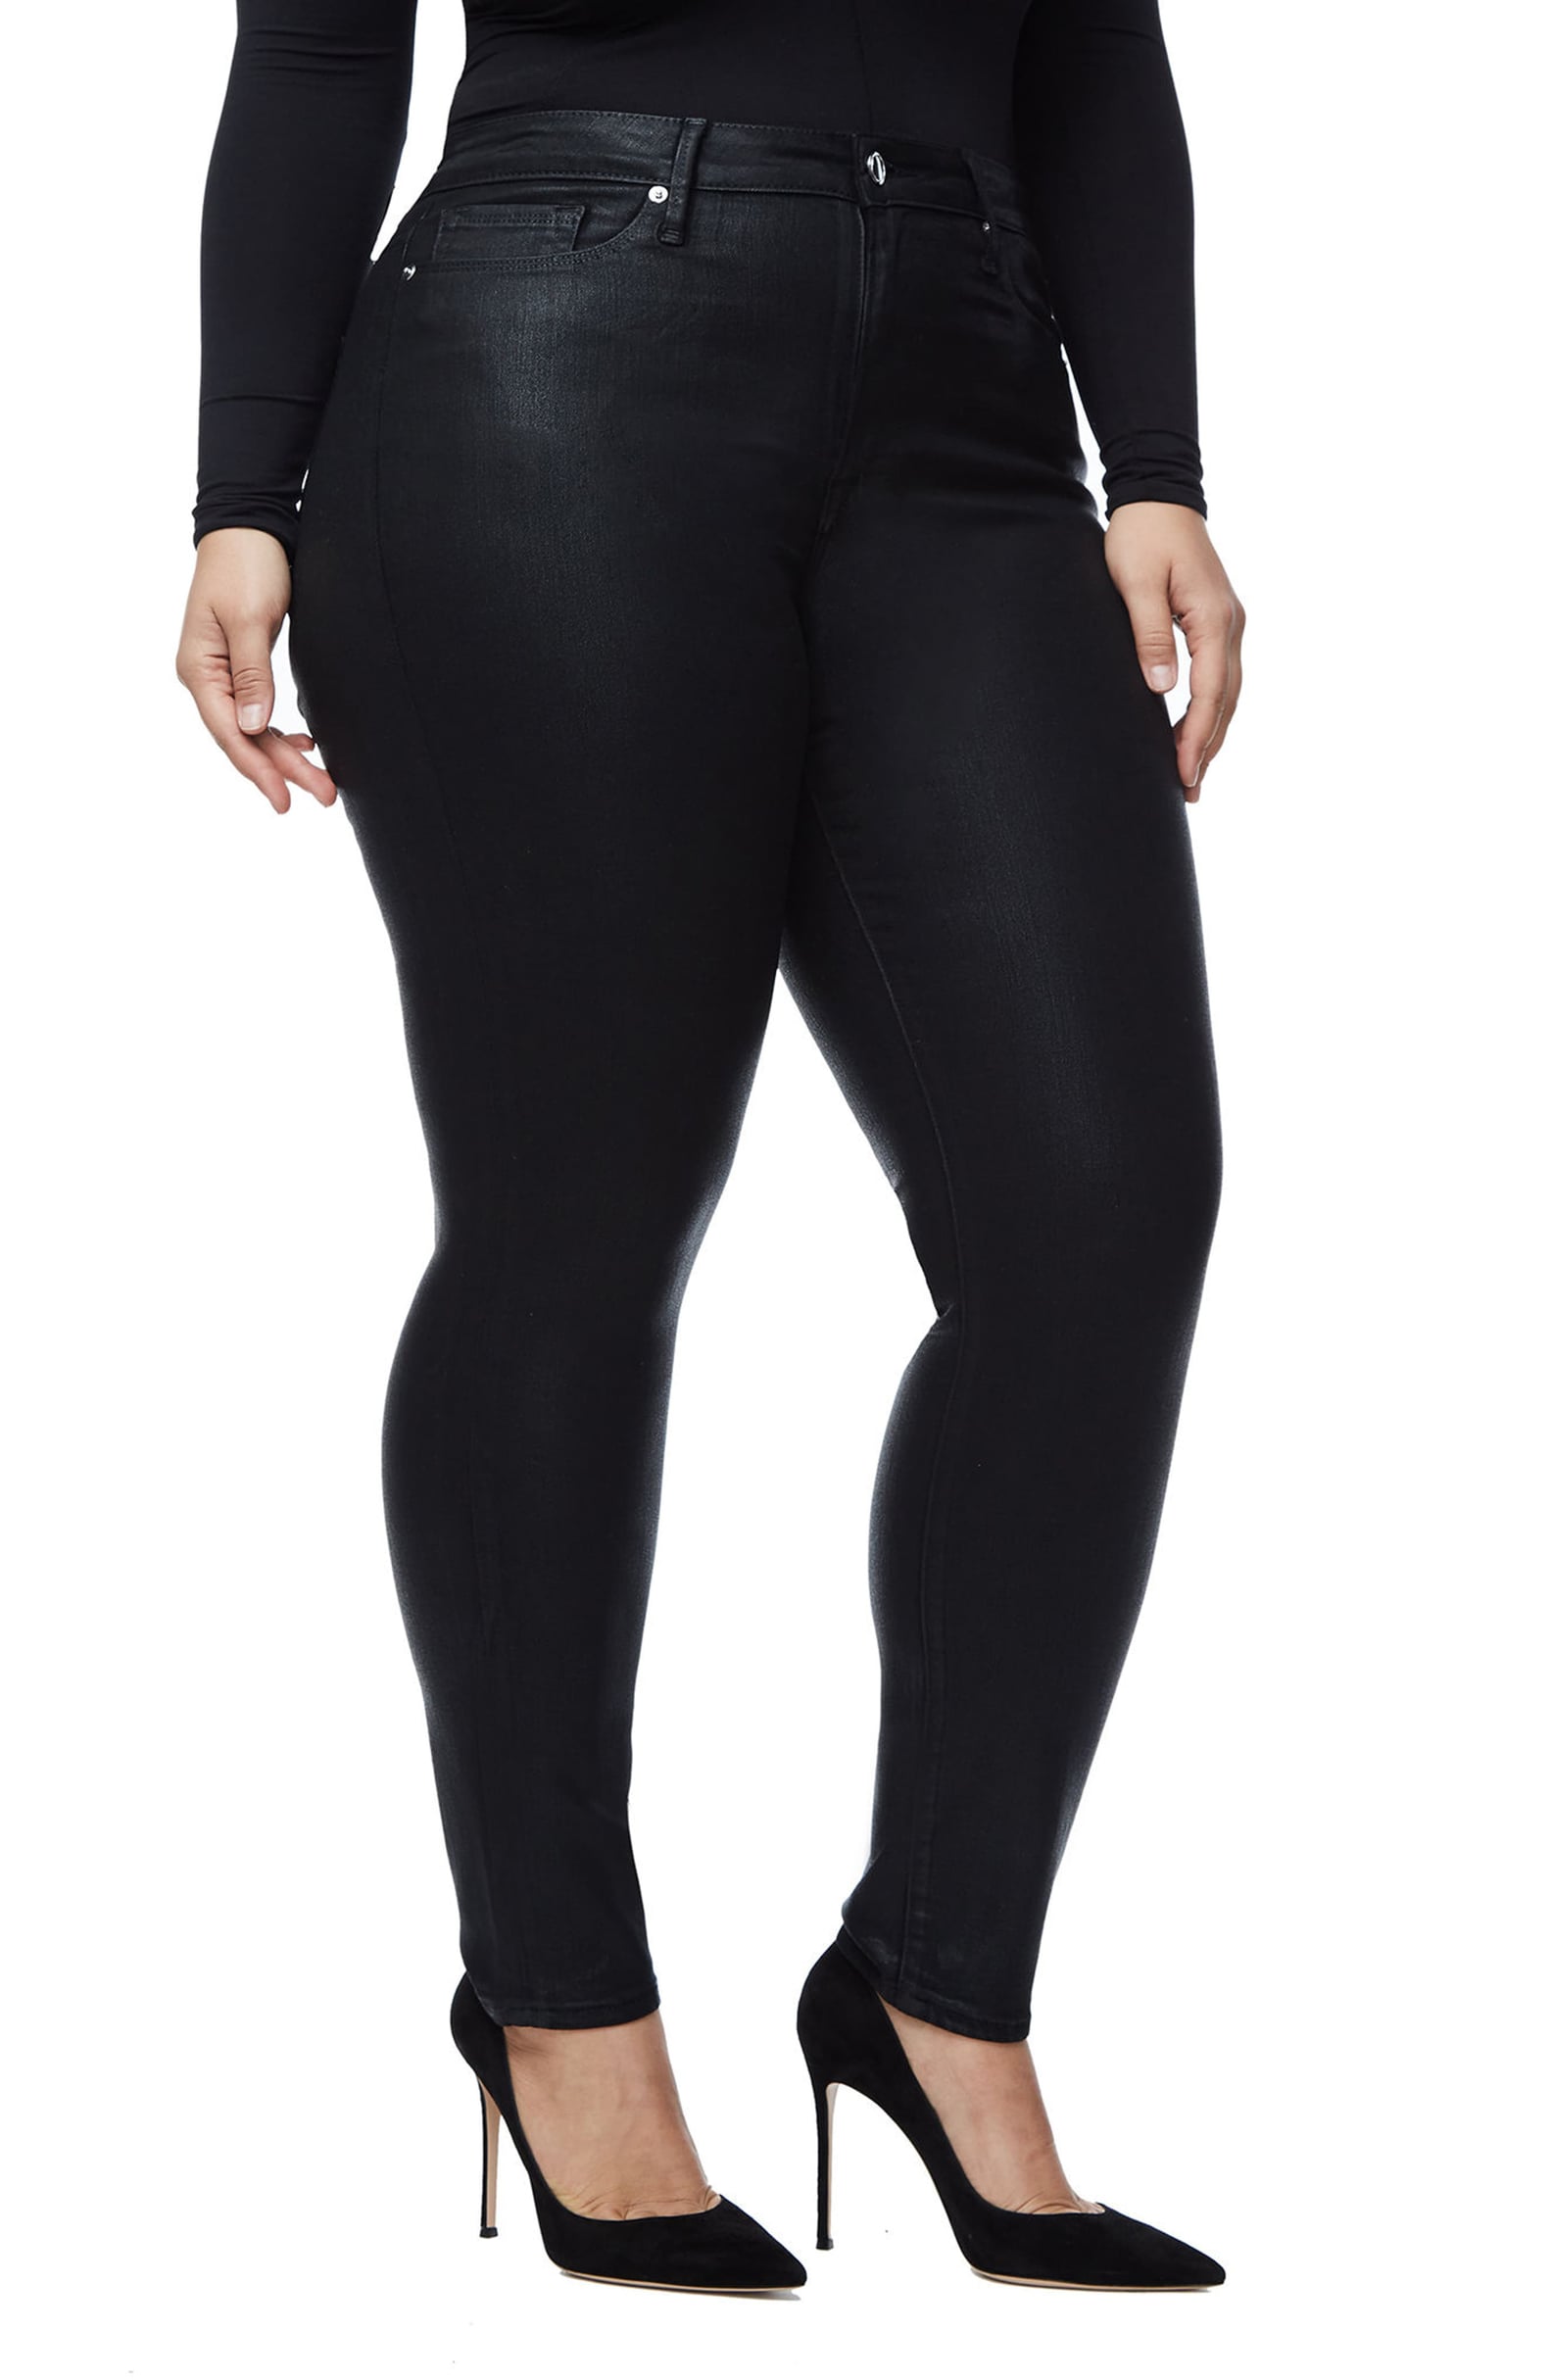 Best Leather Pants For Women 2020 | POPSUGAR Fashion